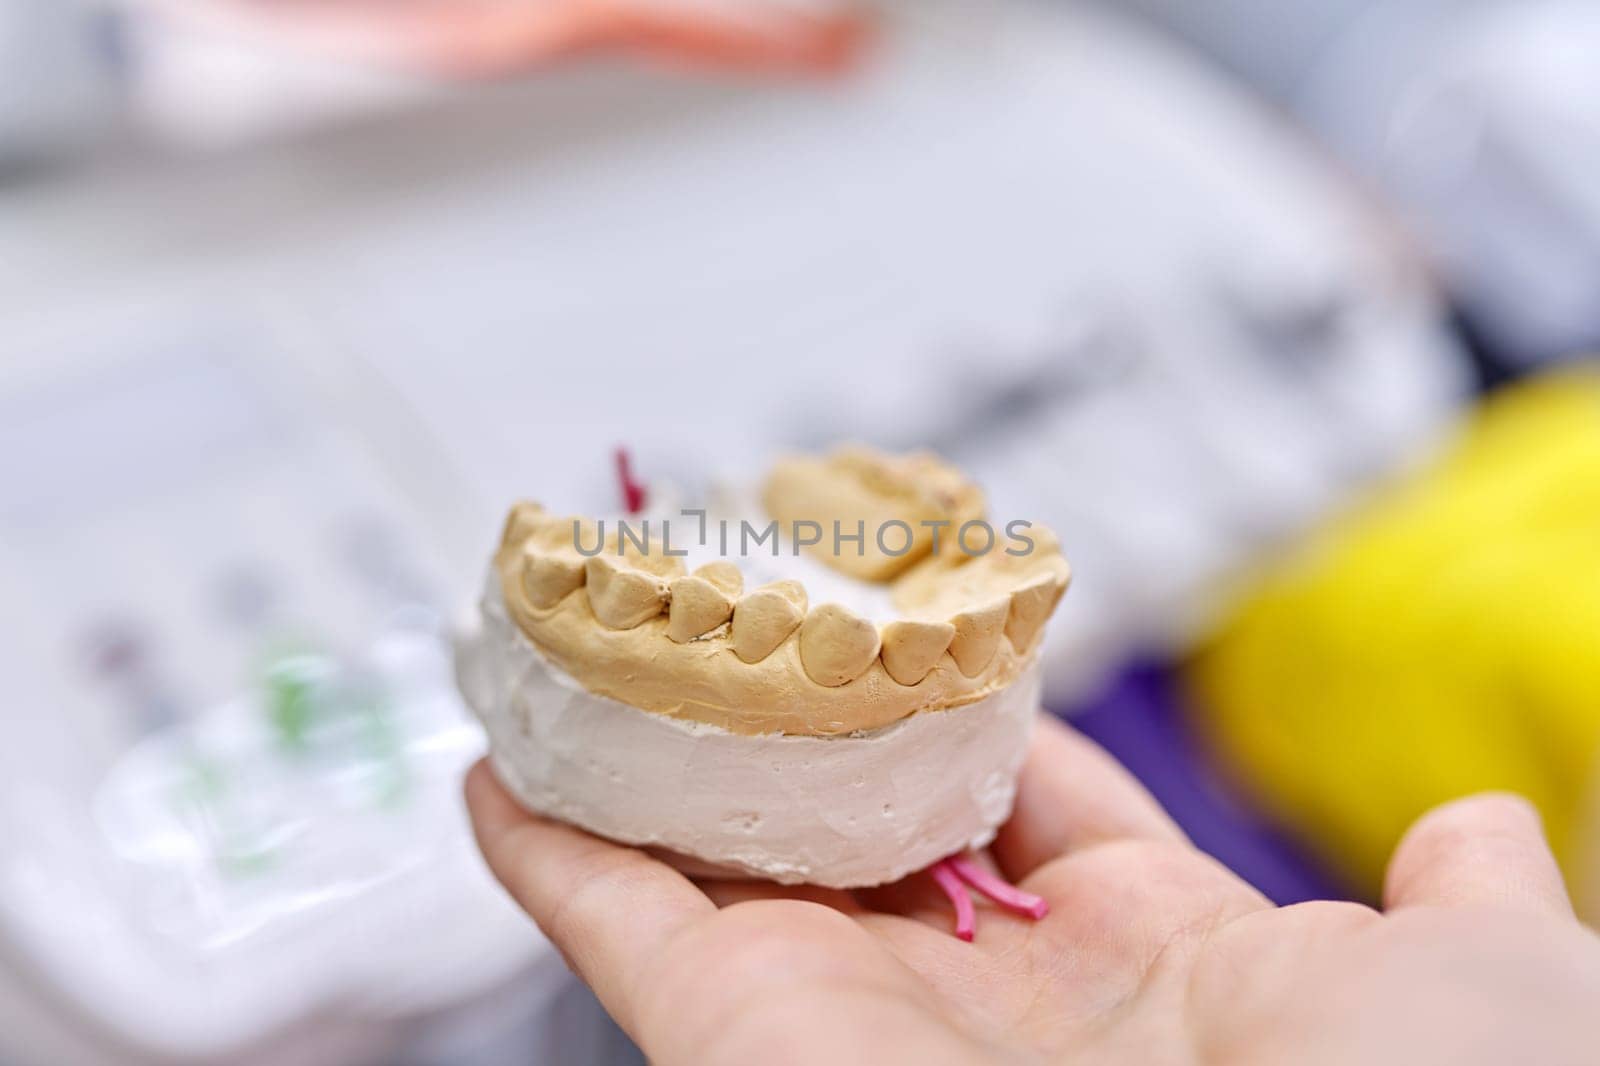 Gypsum model of teeth of jaw, dentist office background by VH-studio